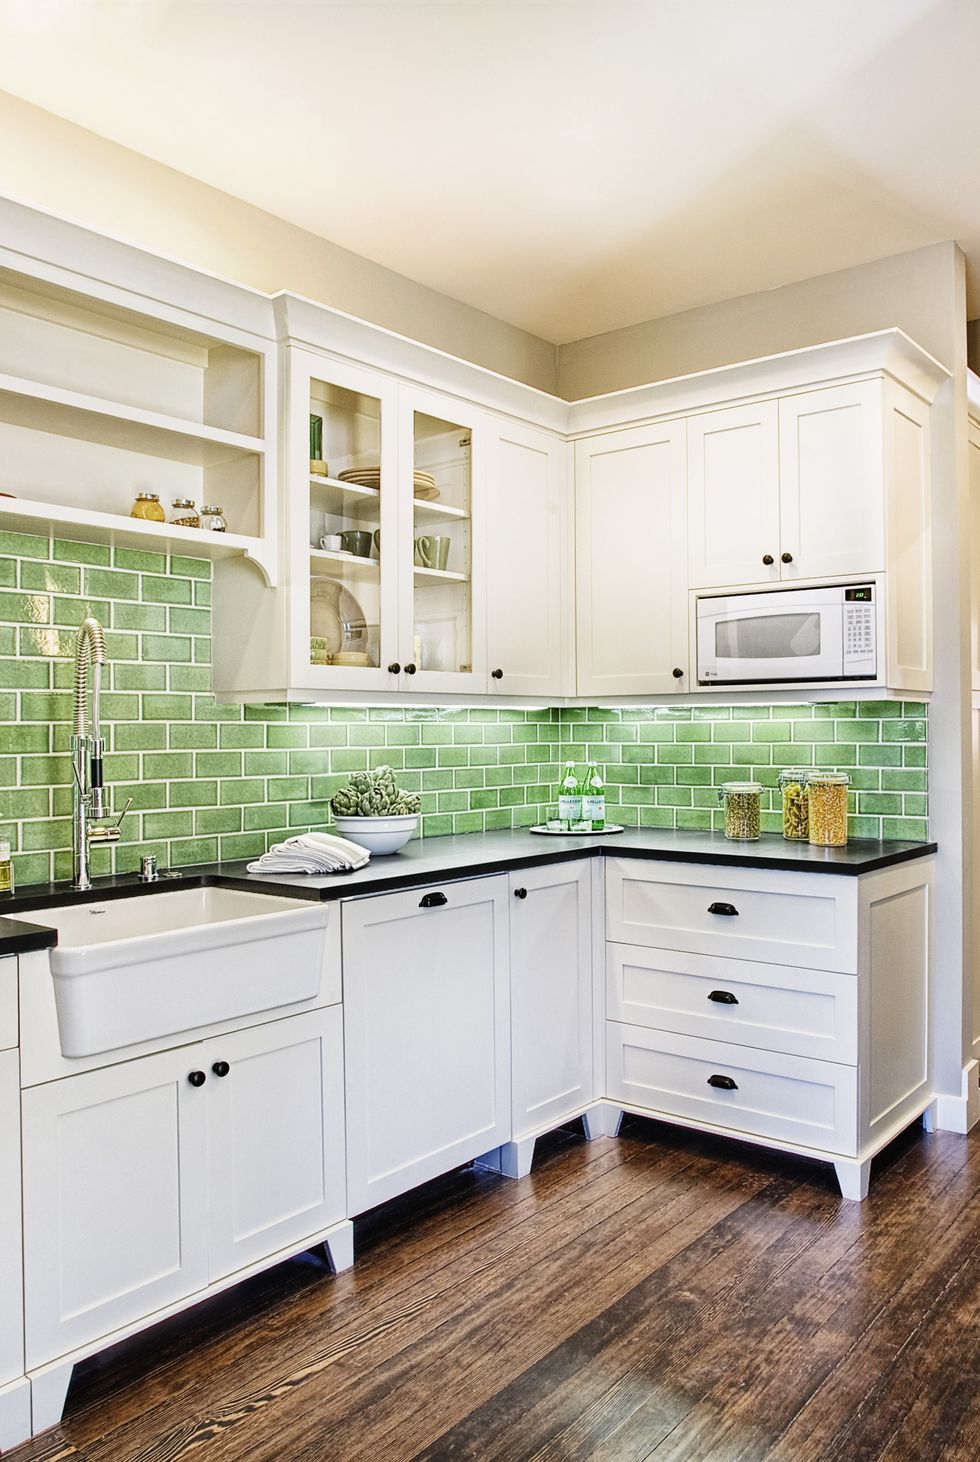 18 Chic Kitchen Backsplash Ideas   Tile Designs for Kitchen ...